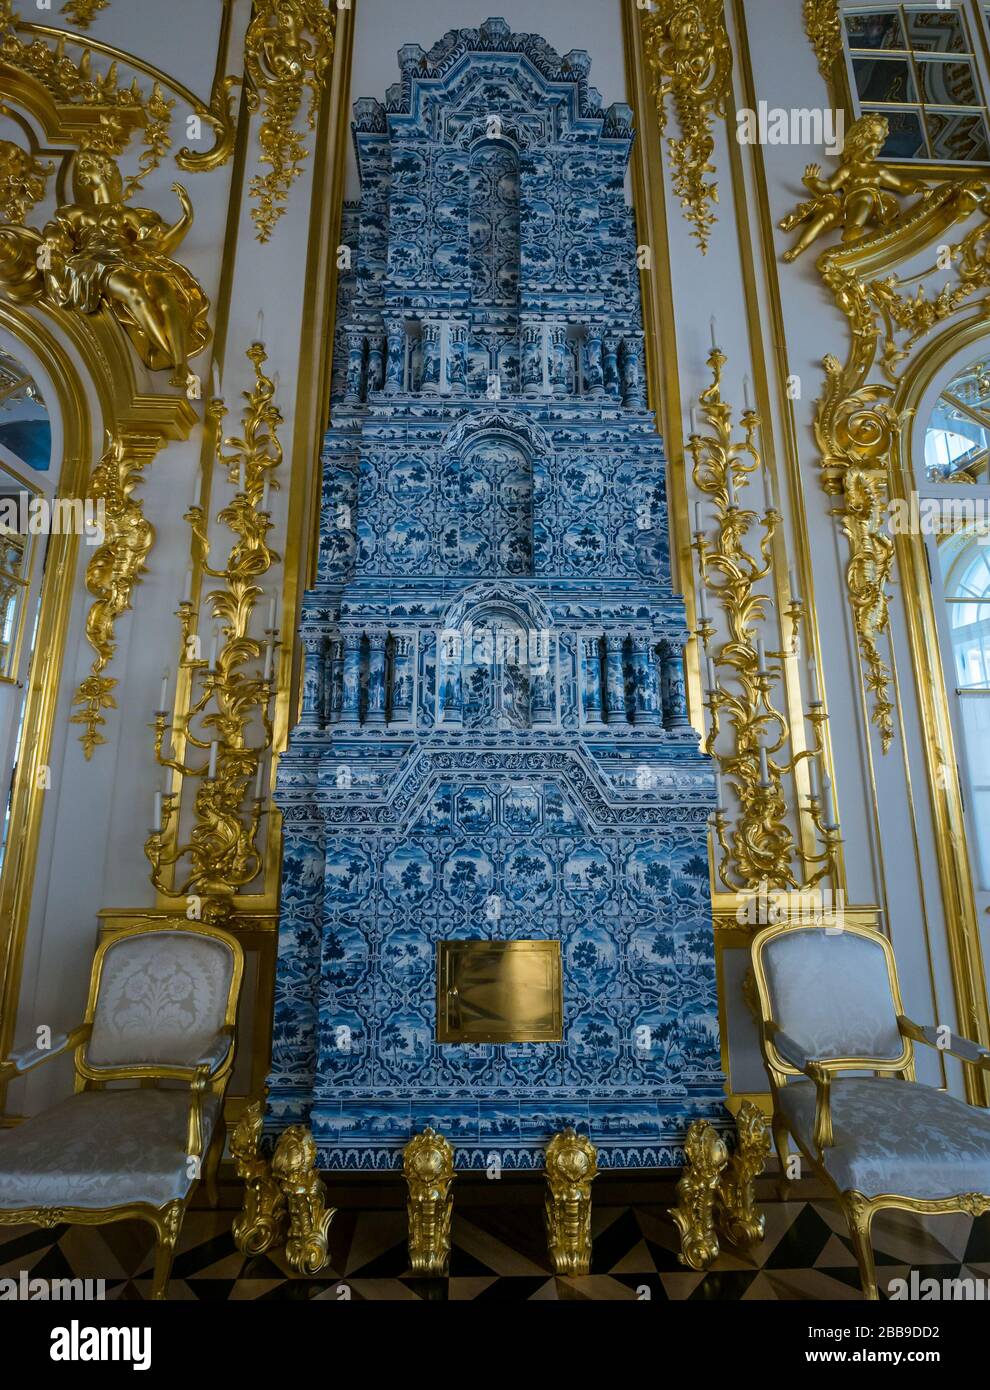 Blue and white ceramic or masonry heater or stove, Catherine Palace interior, Tsars Village, Tsarskoe Selo, Pushkin, Russian Federation Stock Photo